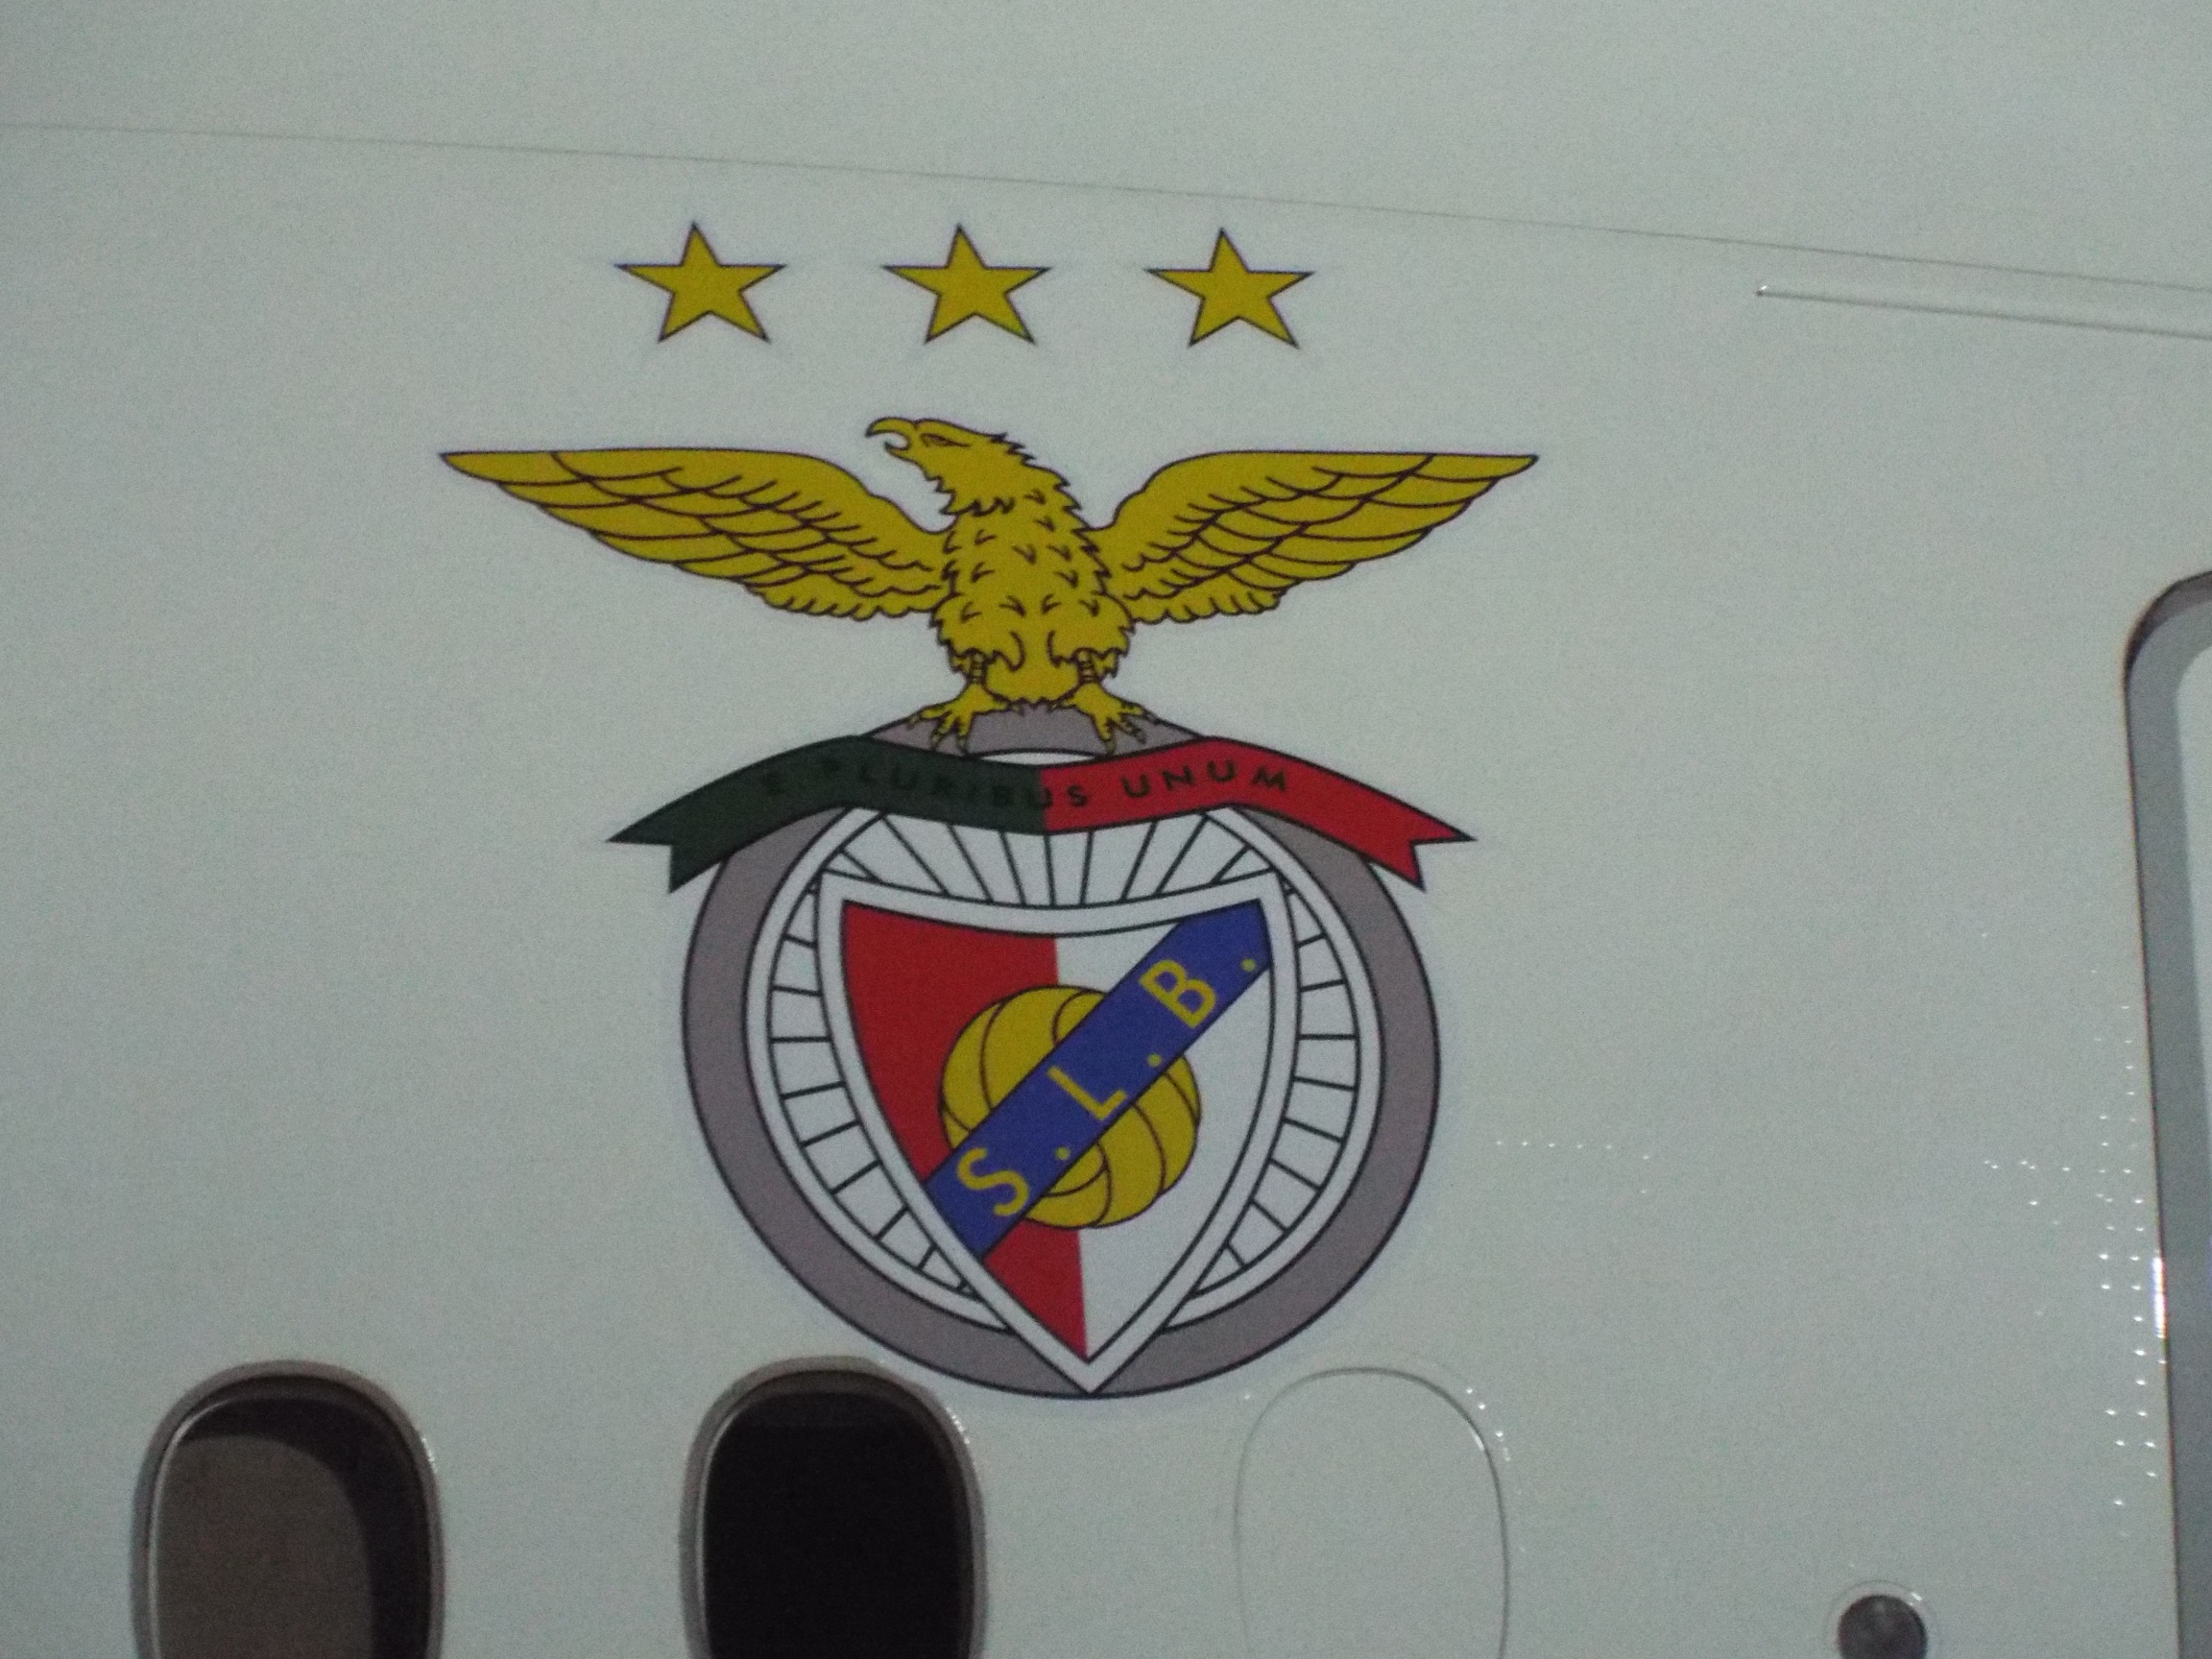 A Benfica címere